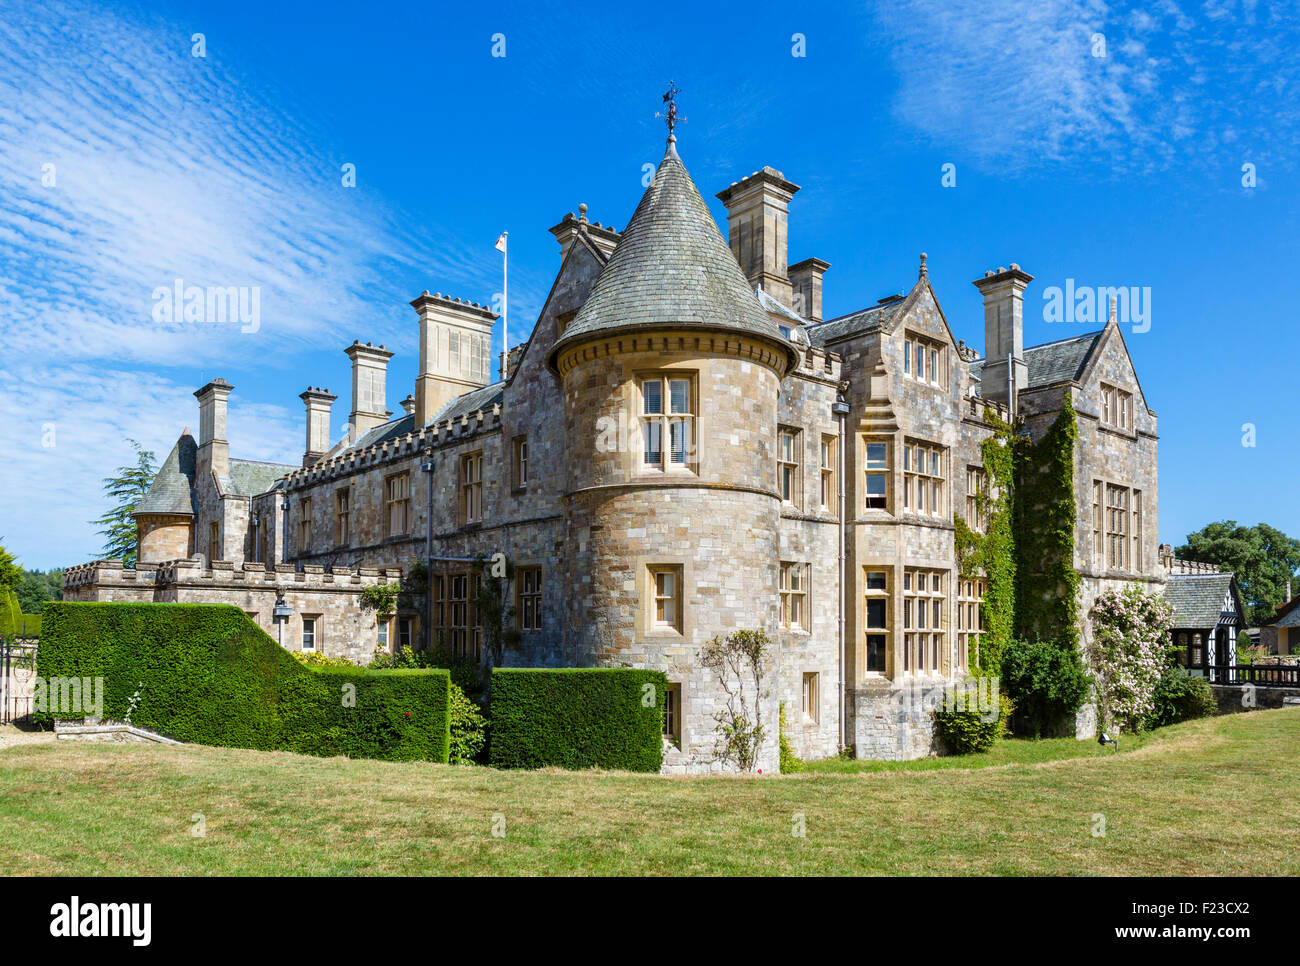 Beaulieu Palace House, casa dei Baroni Montagu, Beaulieu, Hampshire, Inghilterra, Regno Unito Foto Stock